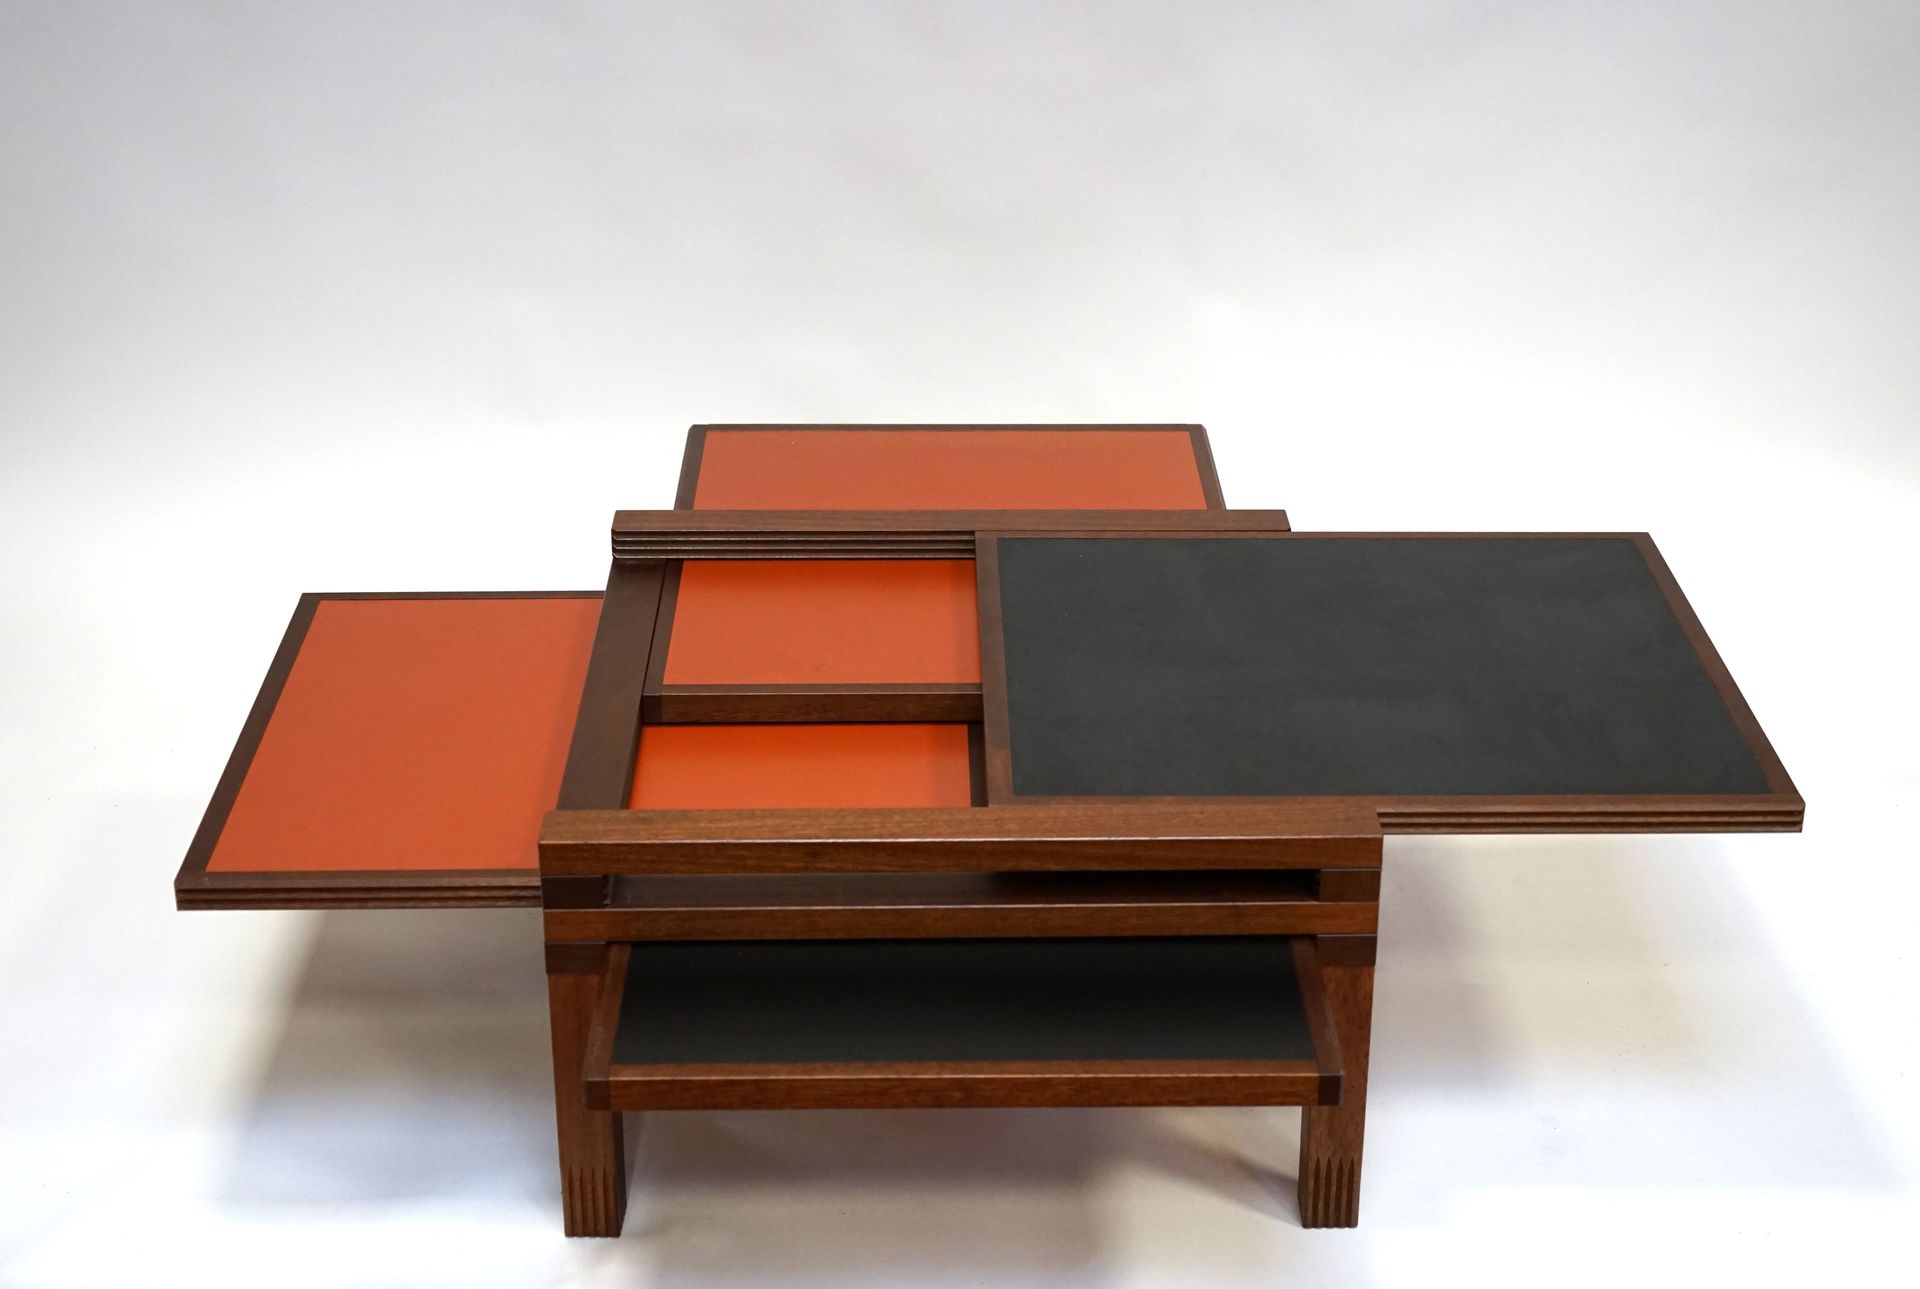 Null Bernard VUARNESSON Modular low table model Hexa.1980年左右。40 x 70厘米（顶部有小污点）。